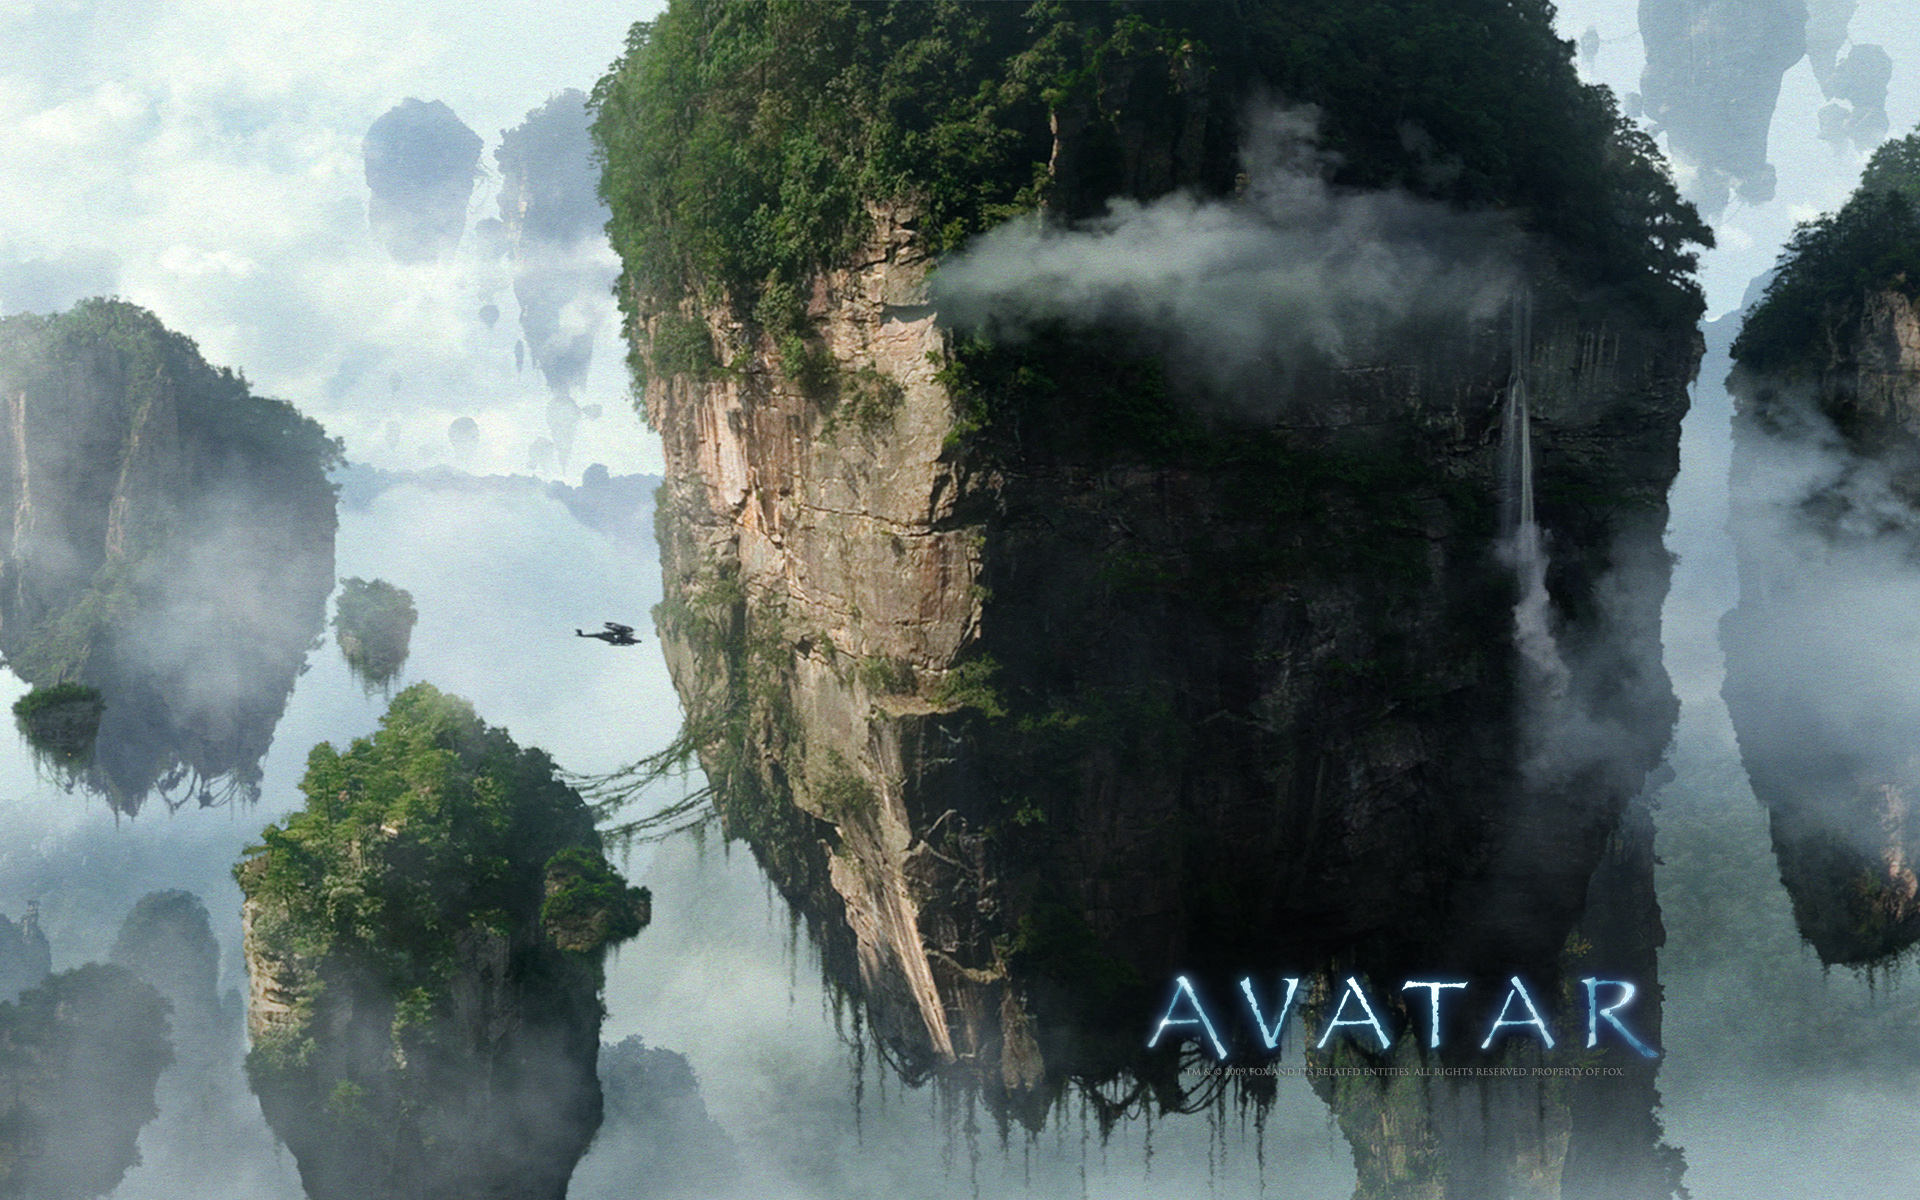 Avatar Pandora 2 wallpaper. Avatar Pandora 2